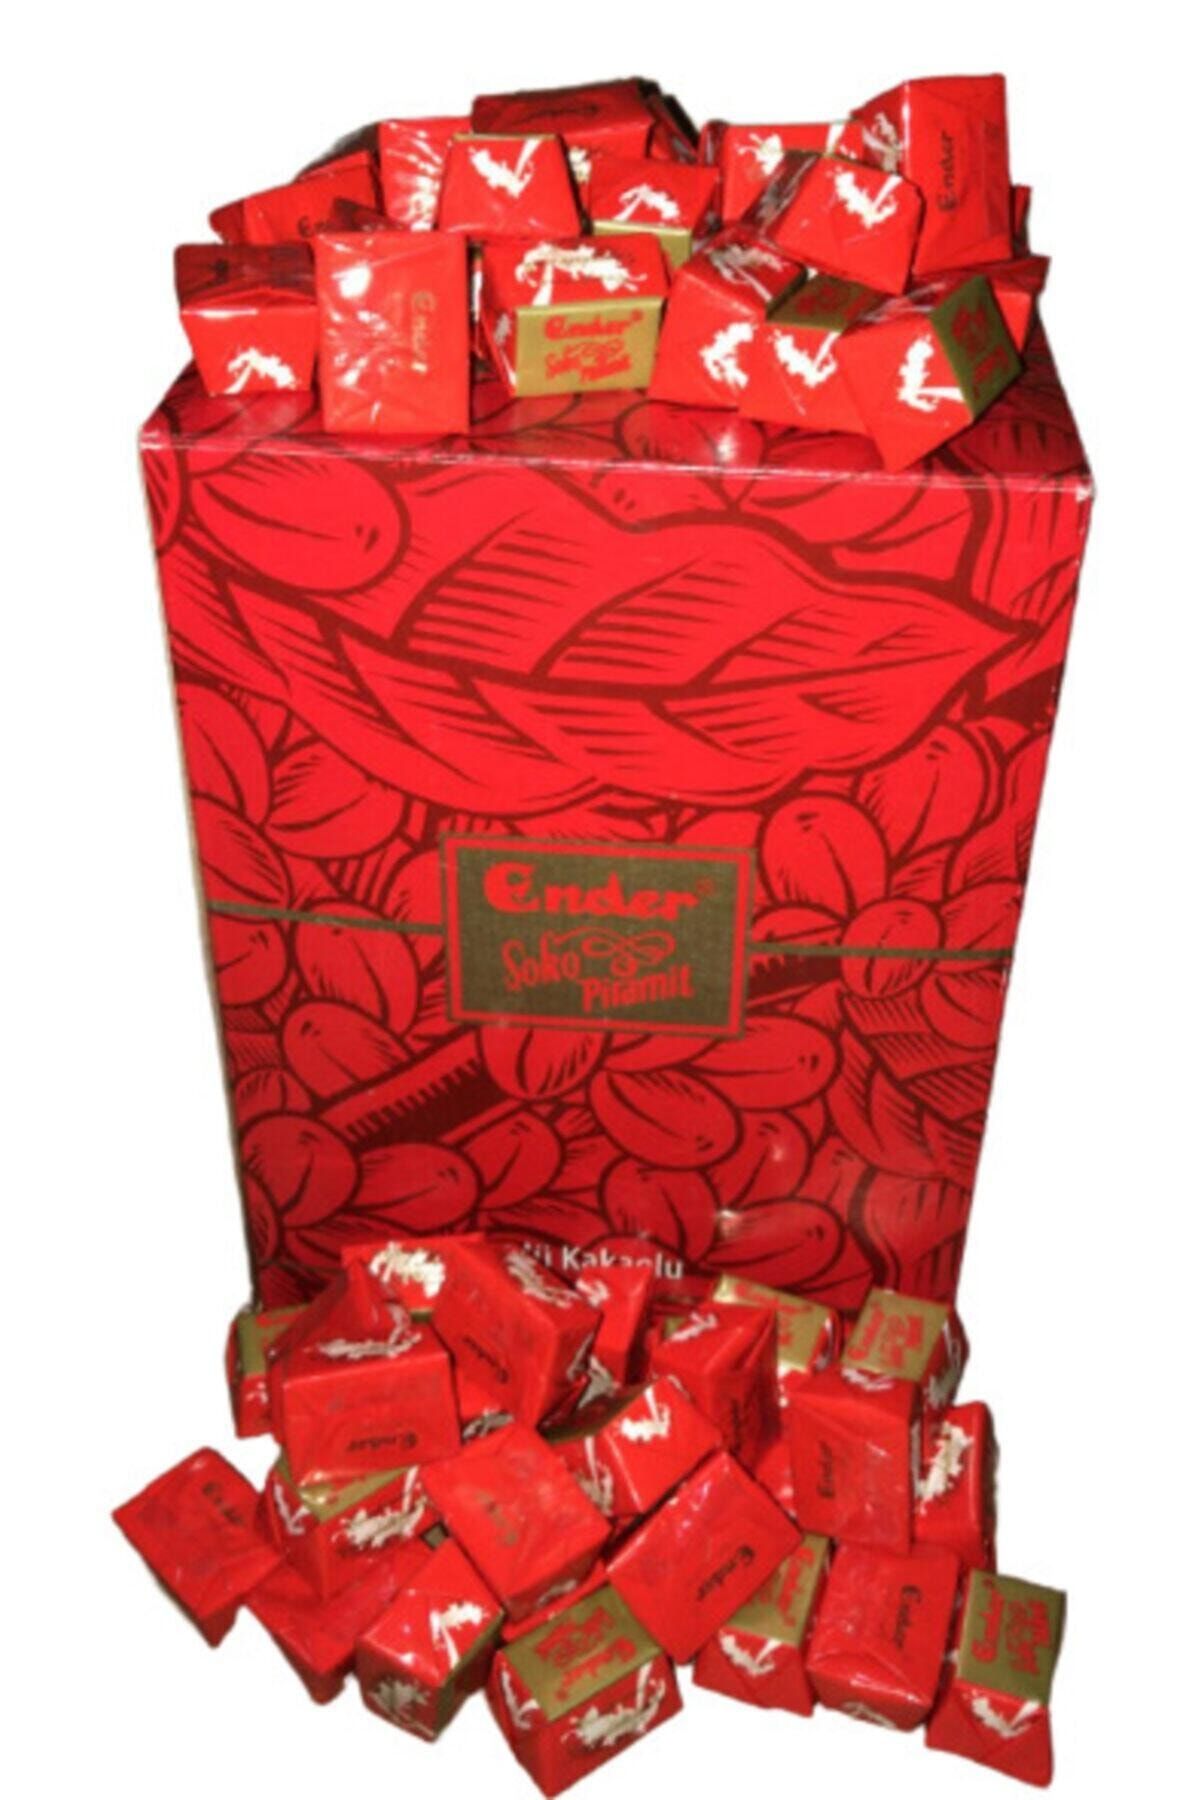 ENDER ÇİKOLATİN Ender Şoko Piramit Sütlü Kakaolu Çikolata /2 Kg *1 Paket